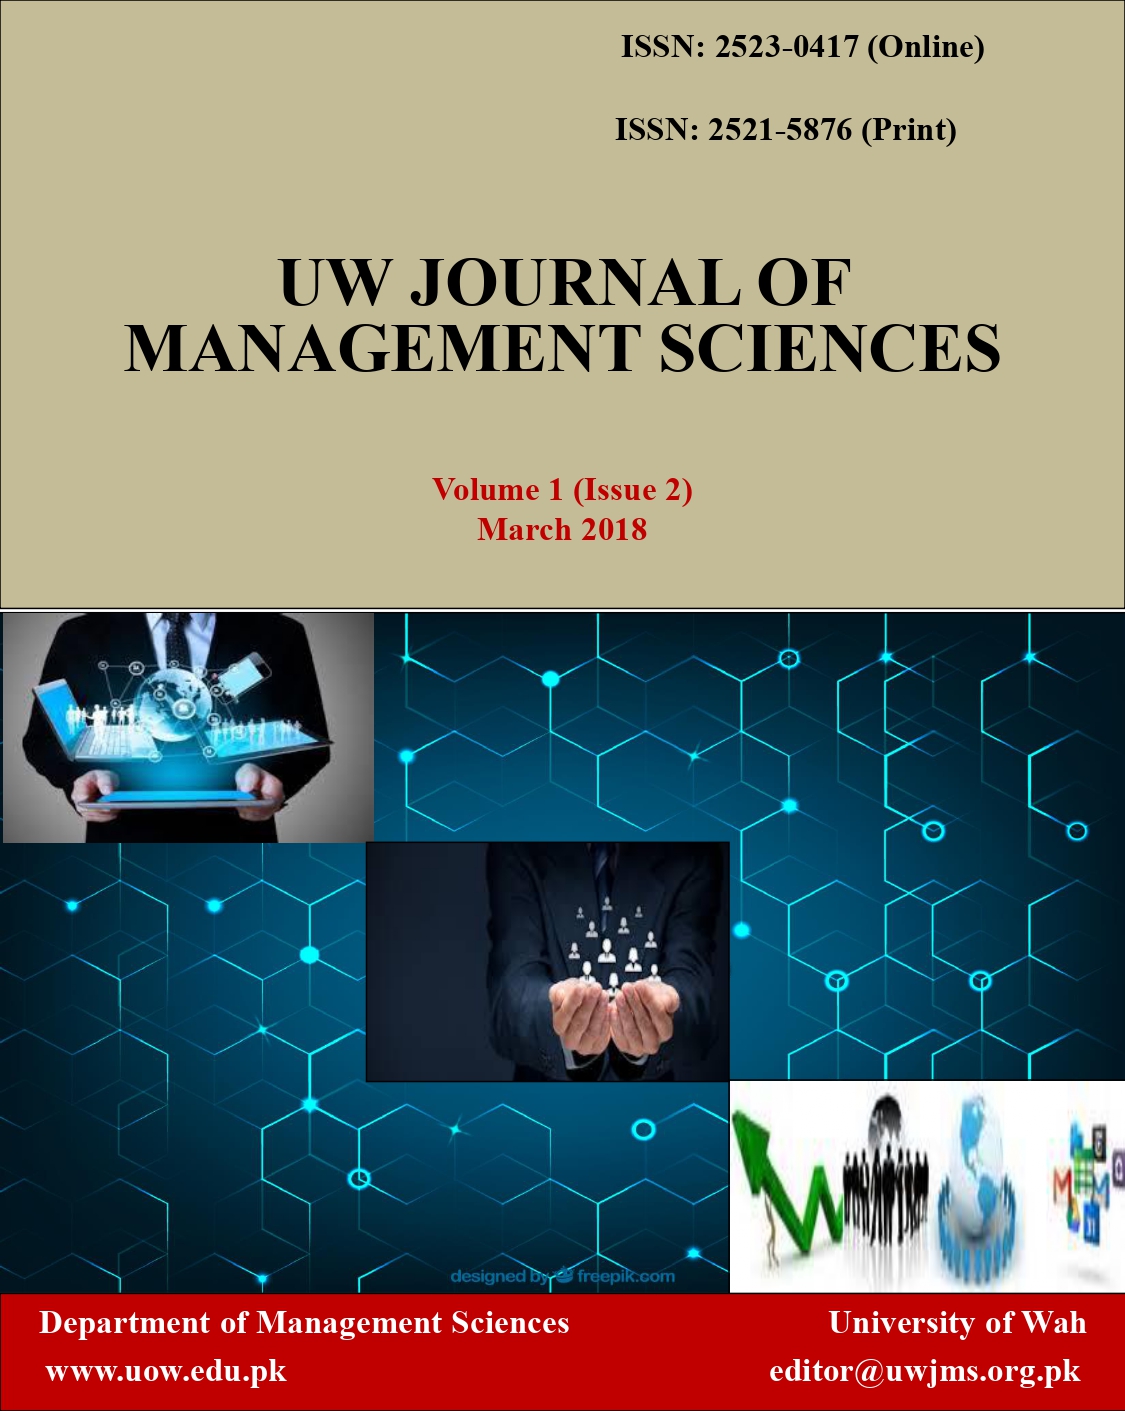 					View Vol. 2 No. 1 (2018): UW JOURNAL OF MANAGEMENT SCIENCES
				